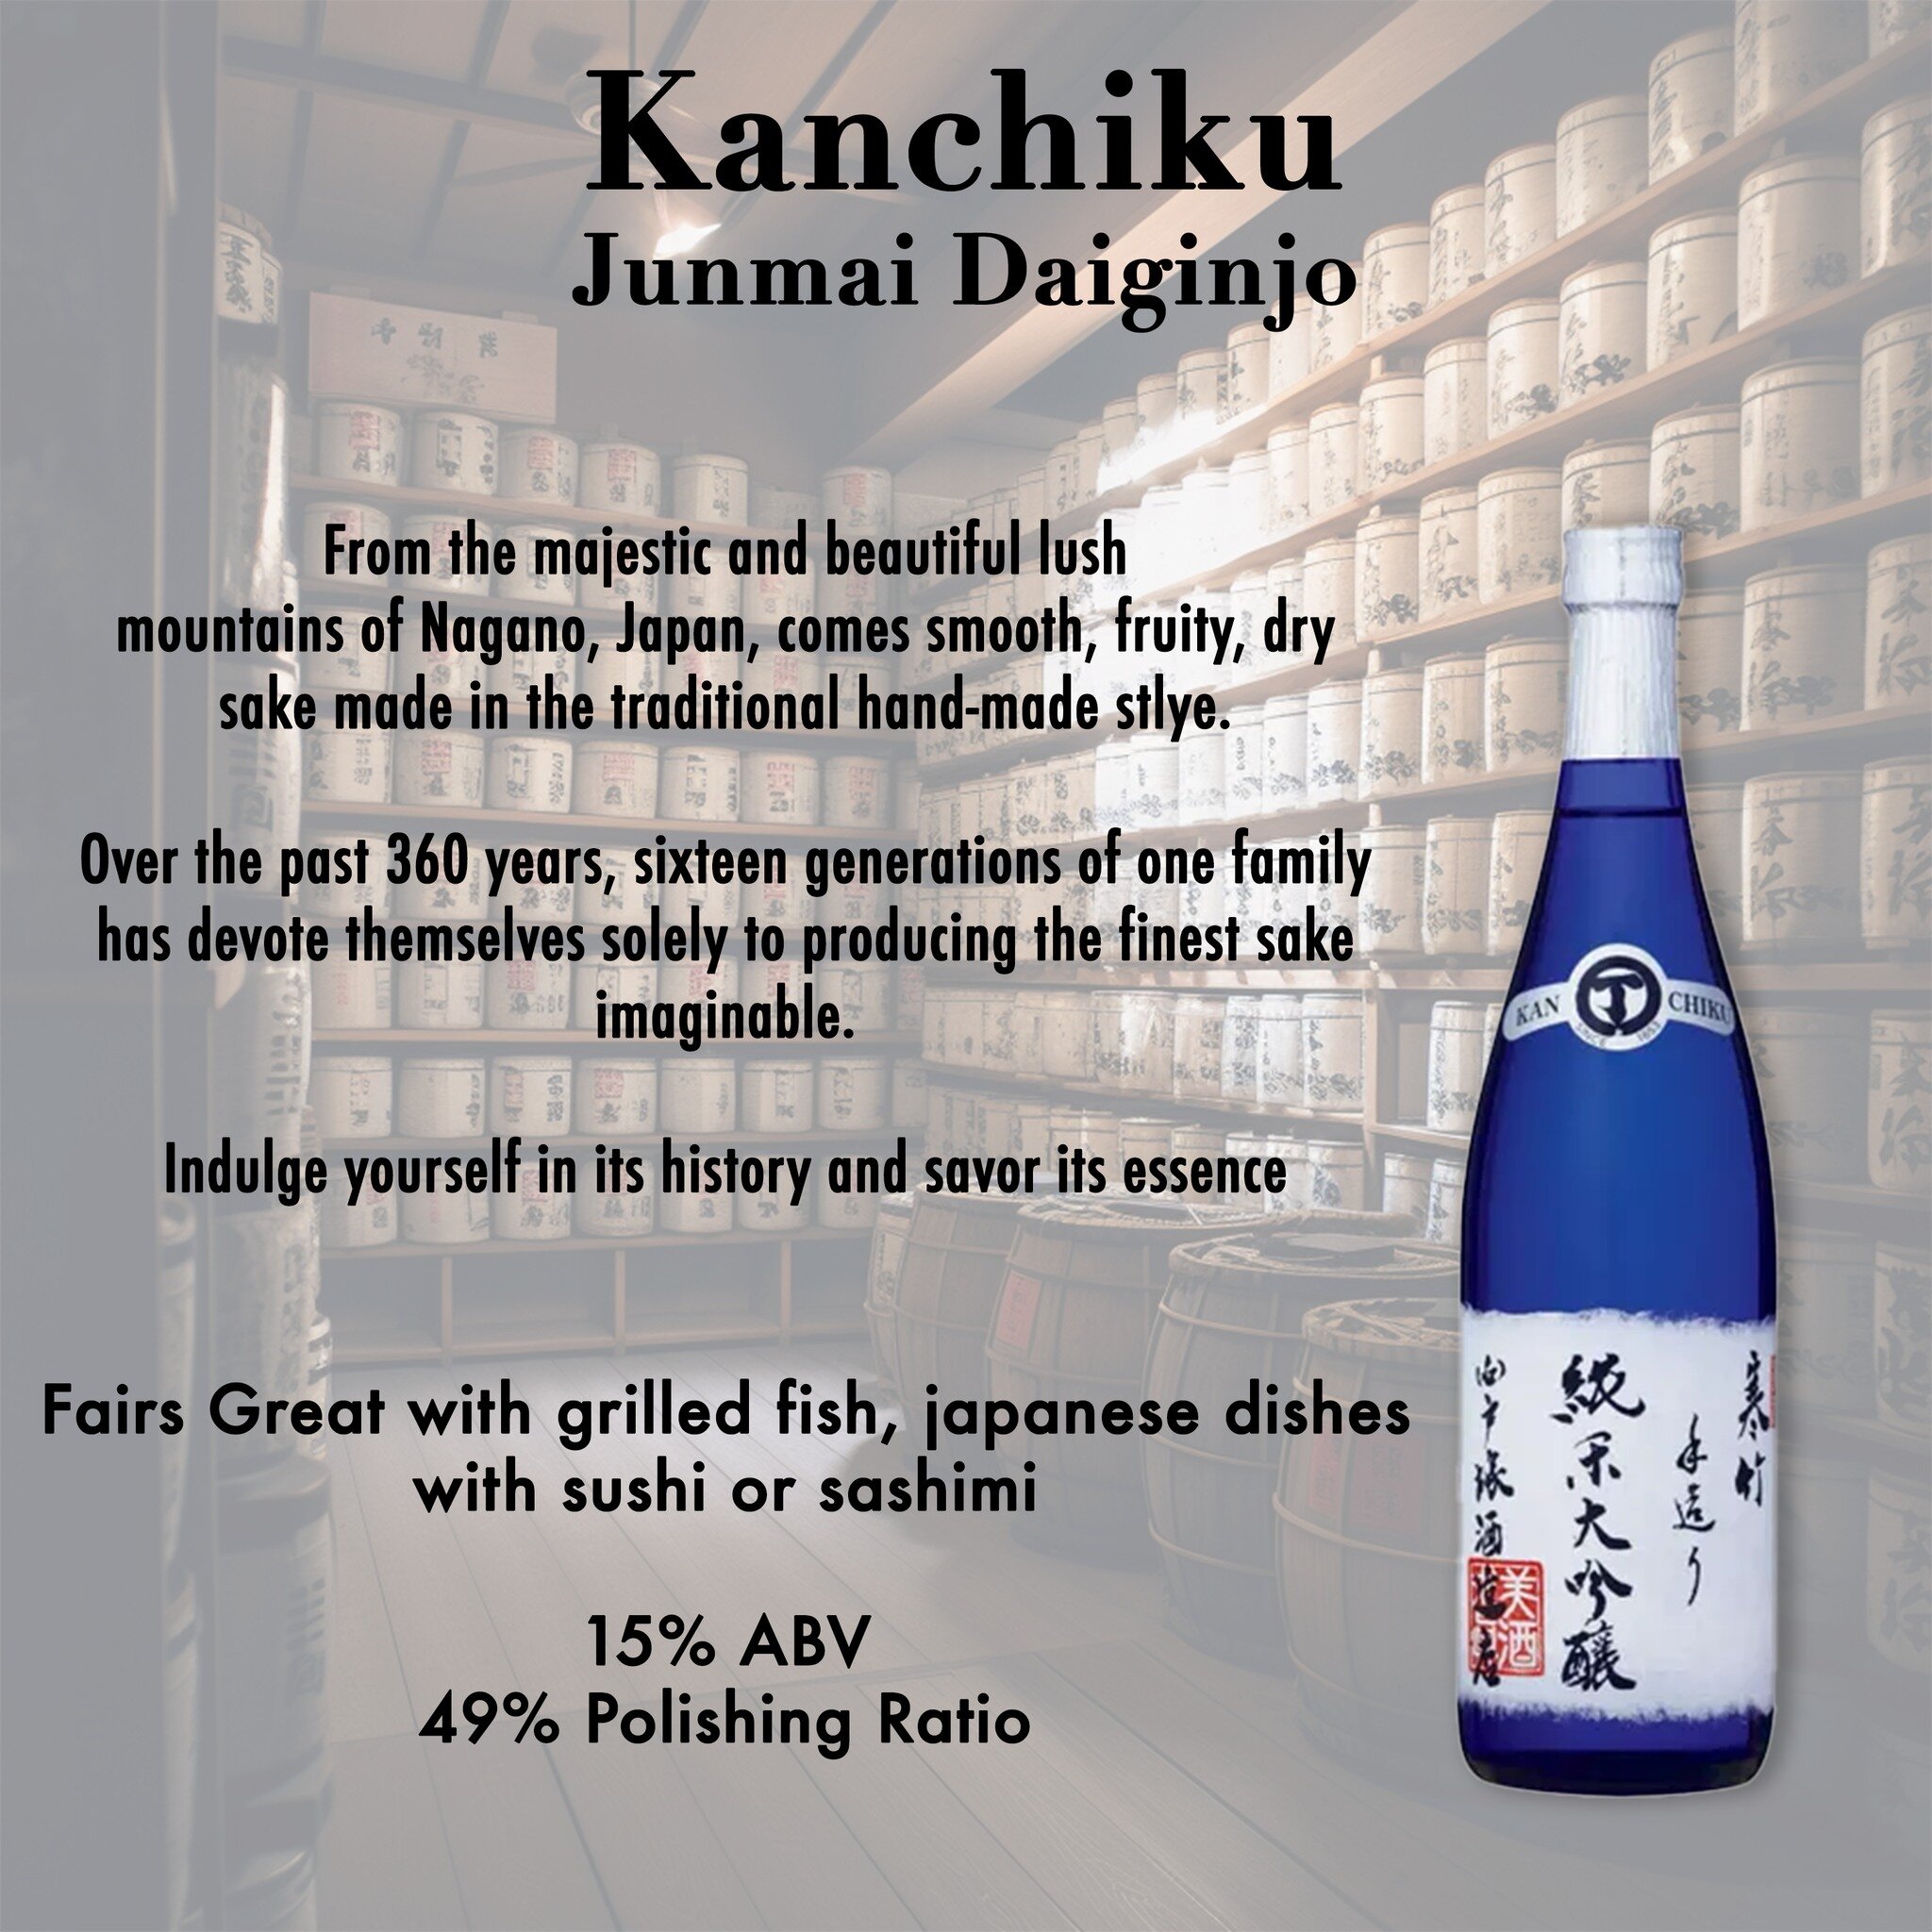 Beautifully hand made, Kanchiku boasts a premium Junmai Daiginjo complexity that is distinct from others in its class
.
.
.
.
.
.
.
.
#nafdc
#northamericanfood
#food 
#sacramento 
#sactown
#westsacramento
#sake
#japanesesake
#japan
#sakelover
#sakest